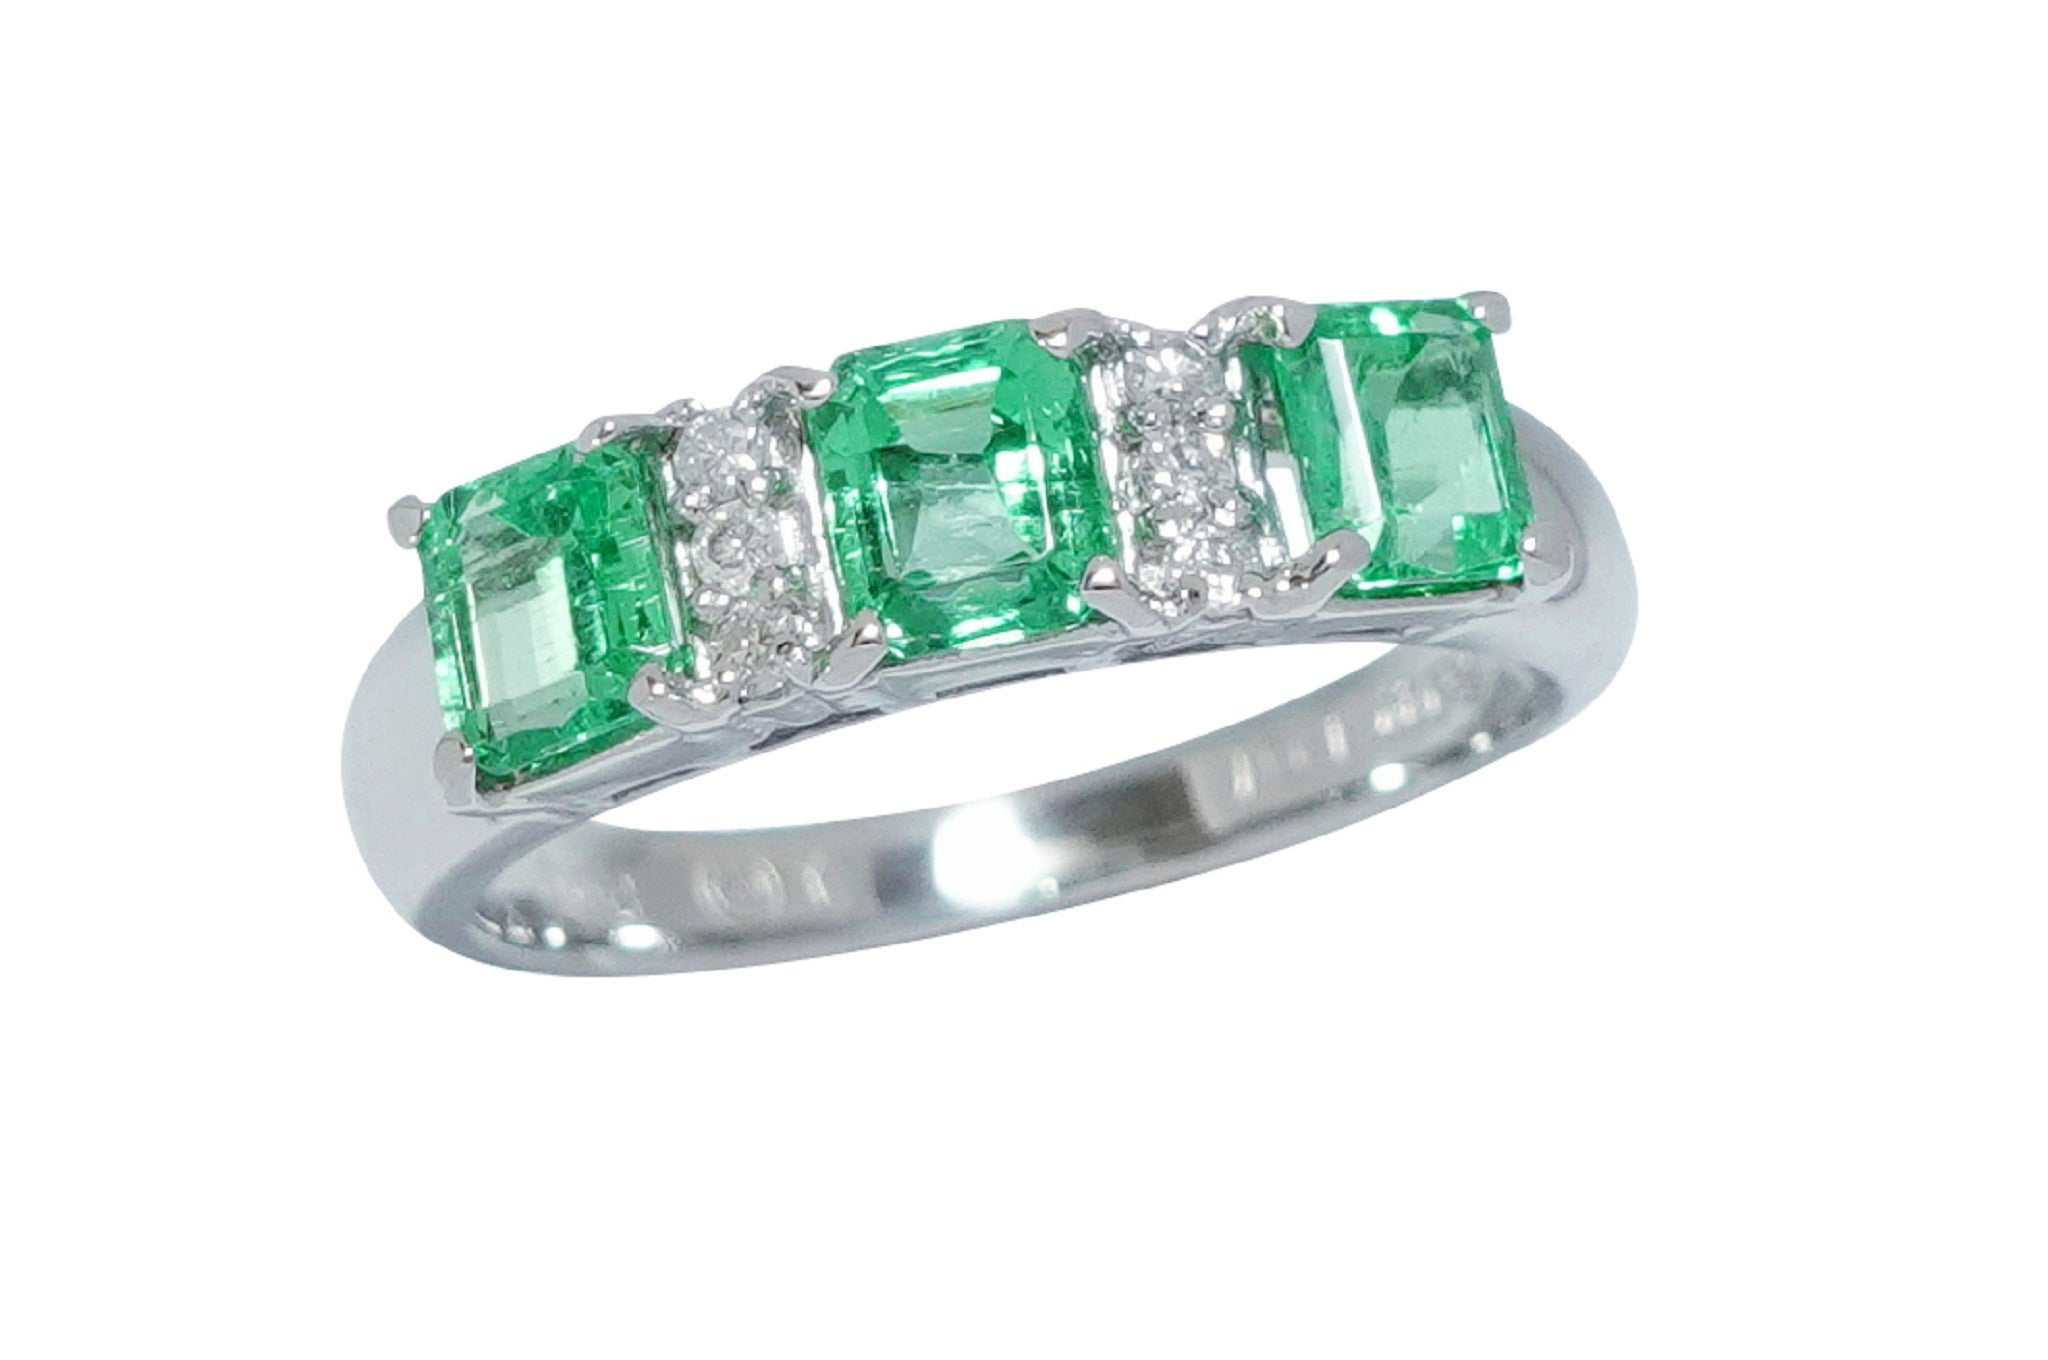 Emerald Pt900エメラルド ダイヤモンドリング(No.48053)